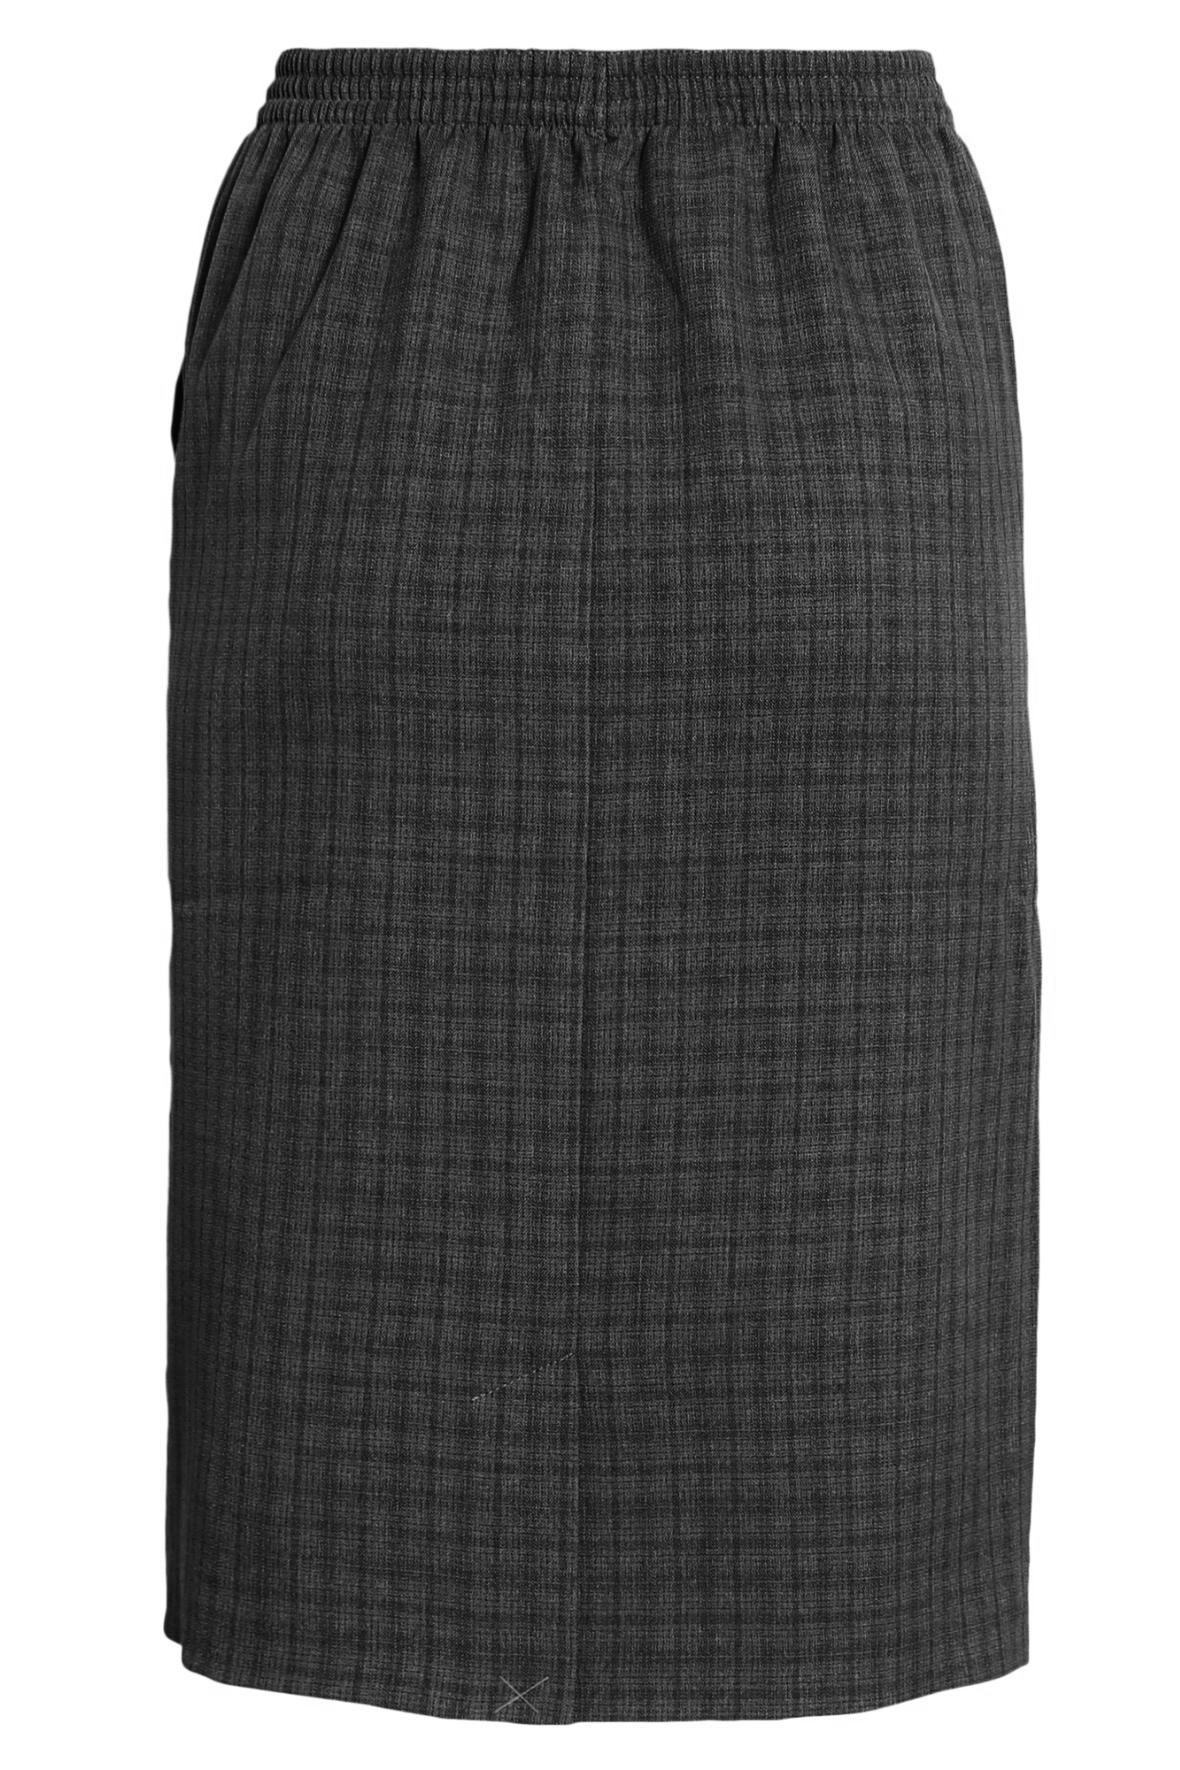 Brandtex nederdel - ternet med linning - Hos Lohse